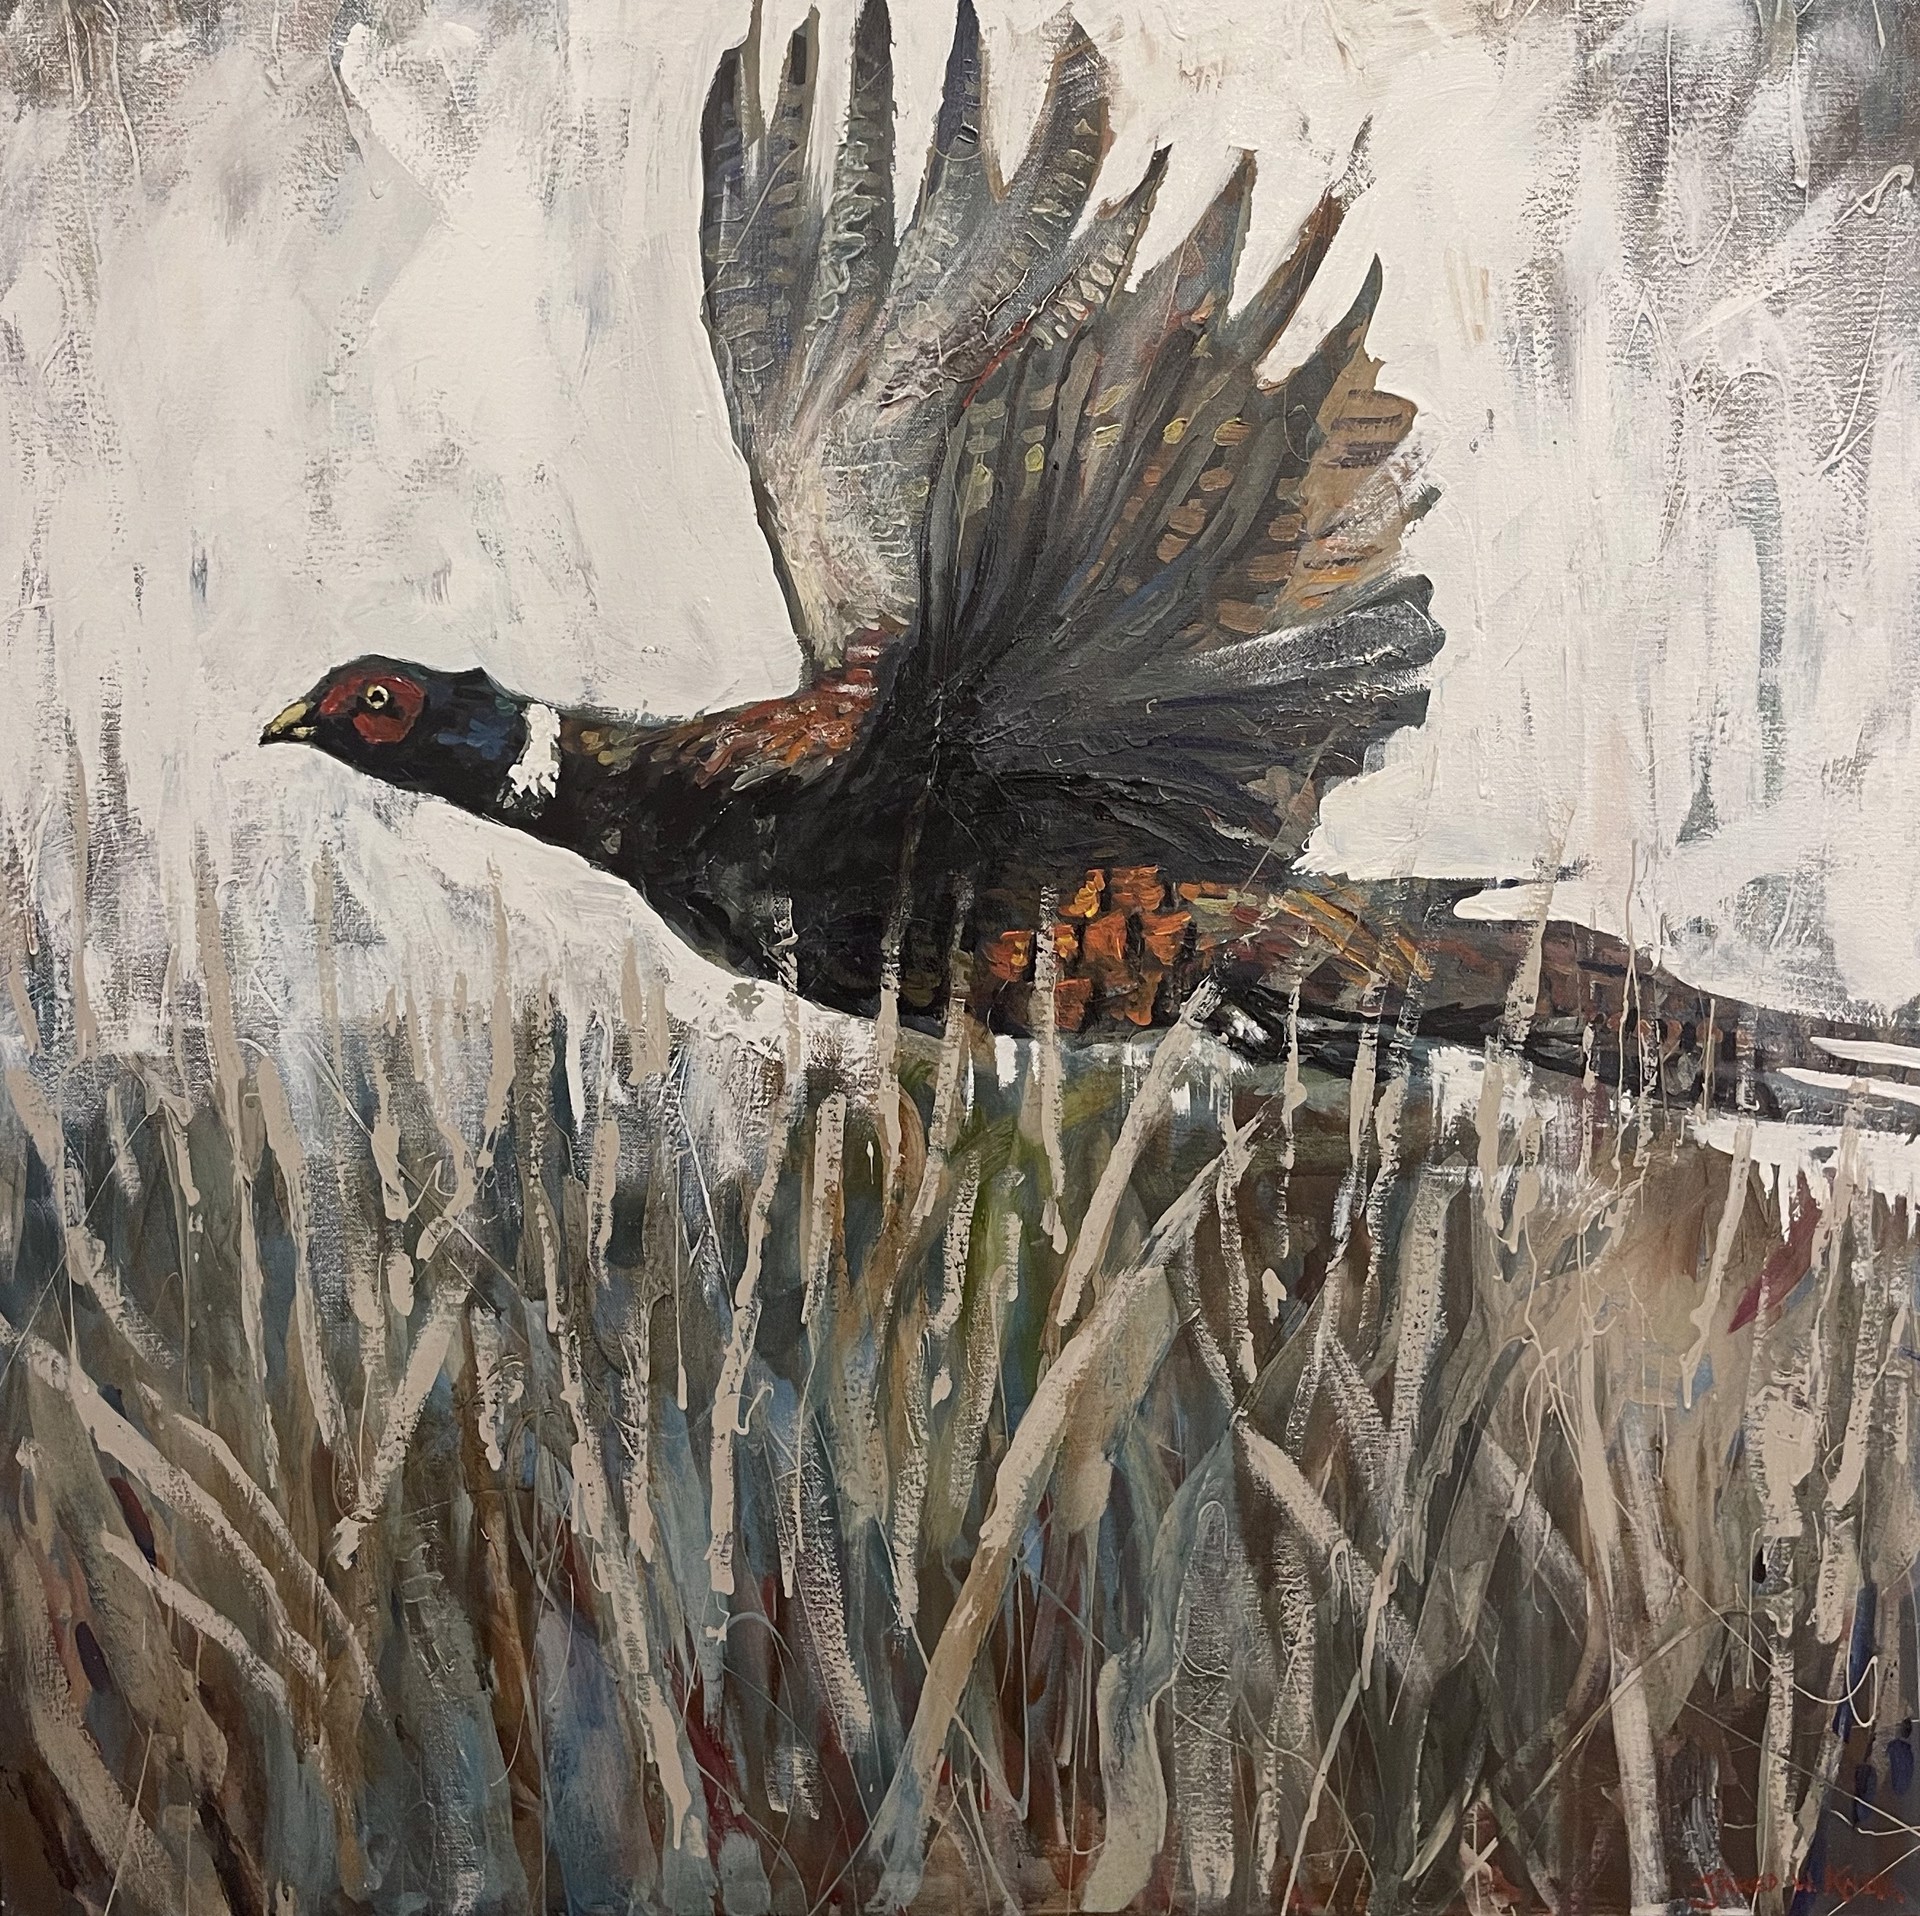 Pheasant in Flight by Jared Knox